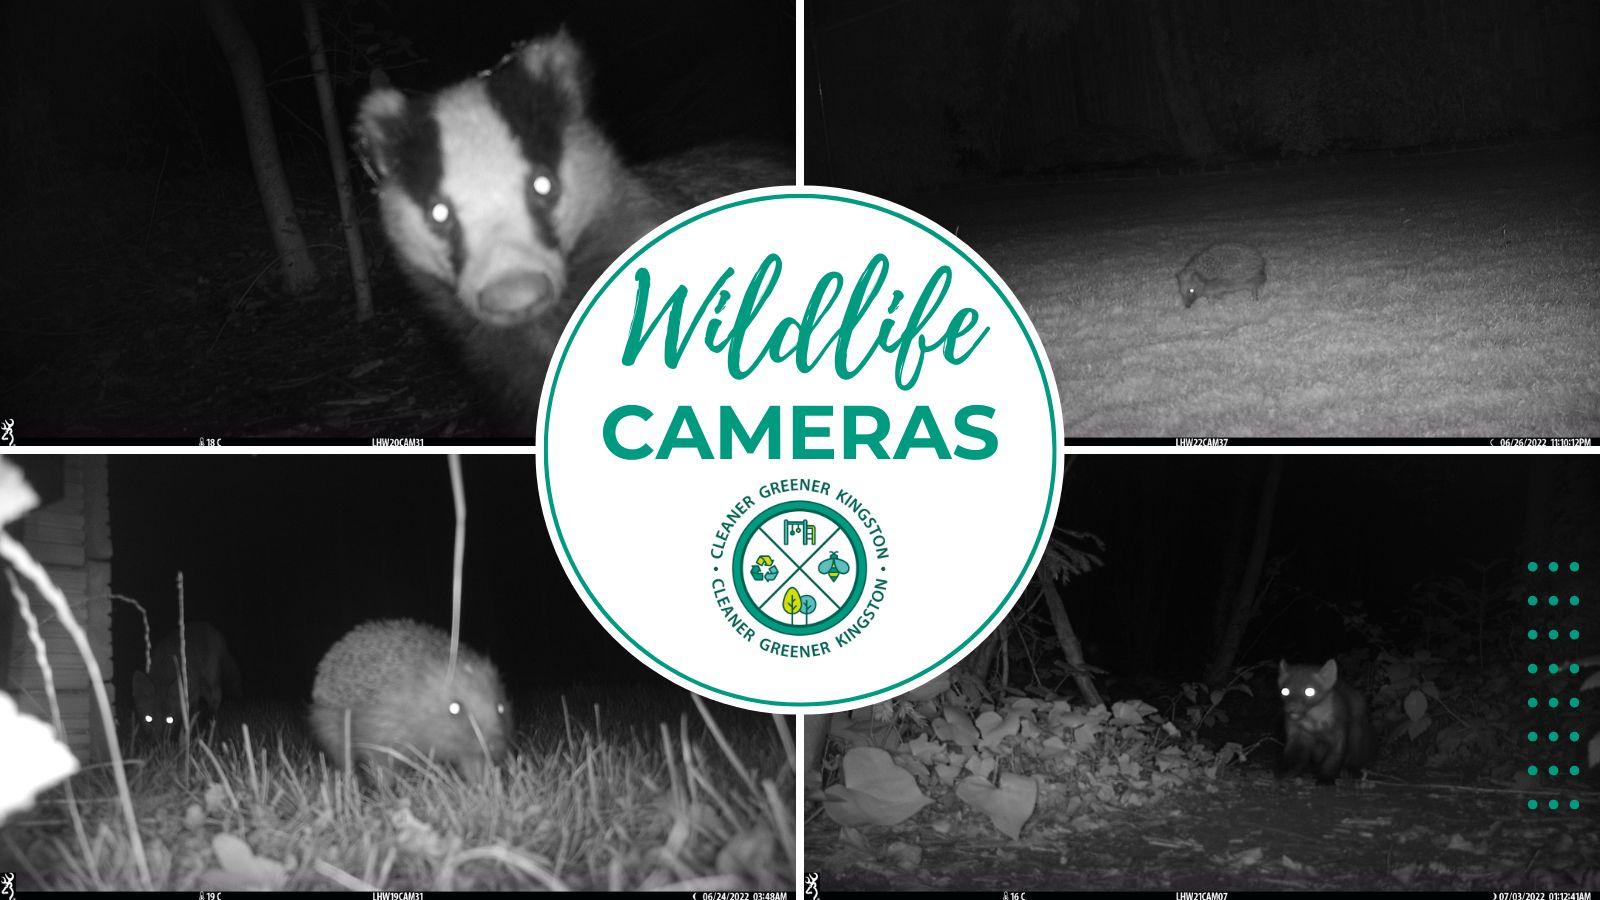 Wildlife cameras